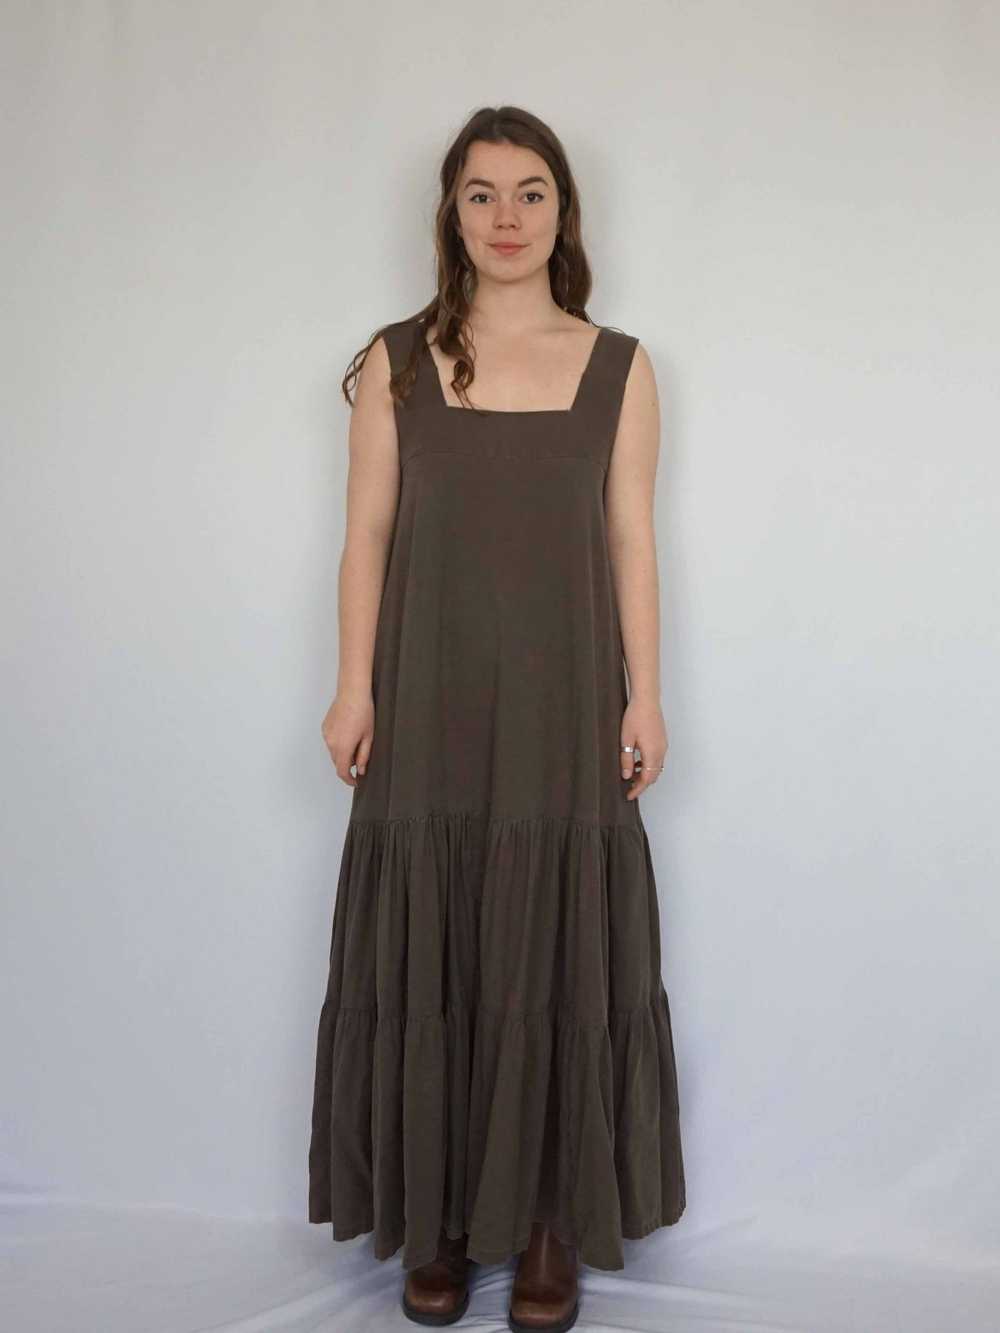 Laura Ashley Brown Pinafore Dress - S - image 4